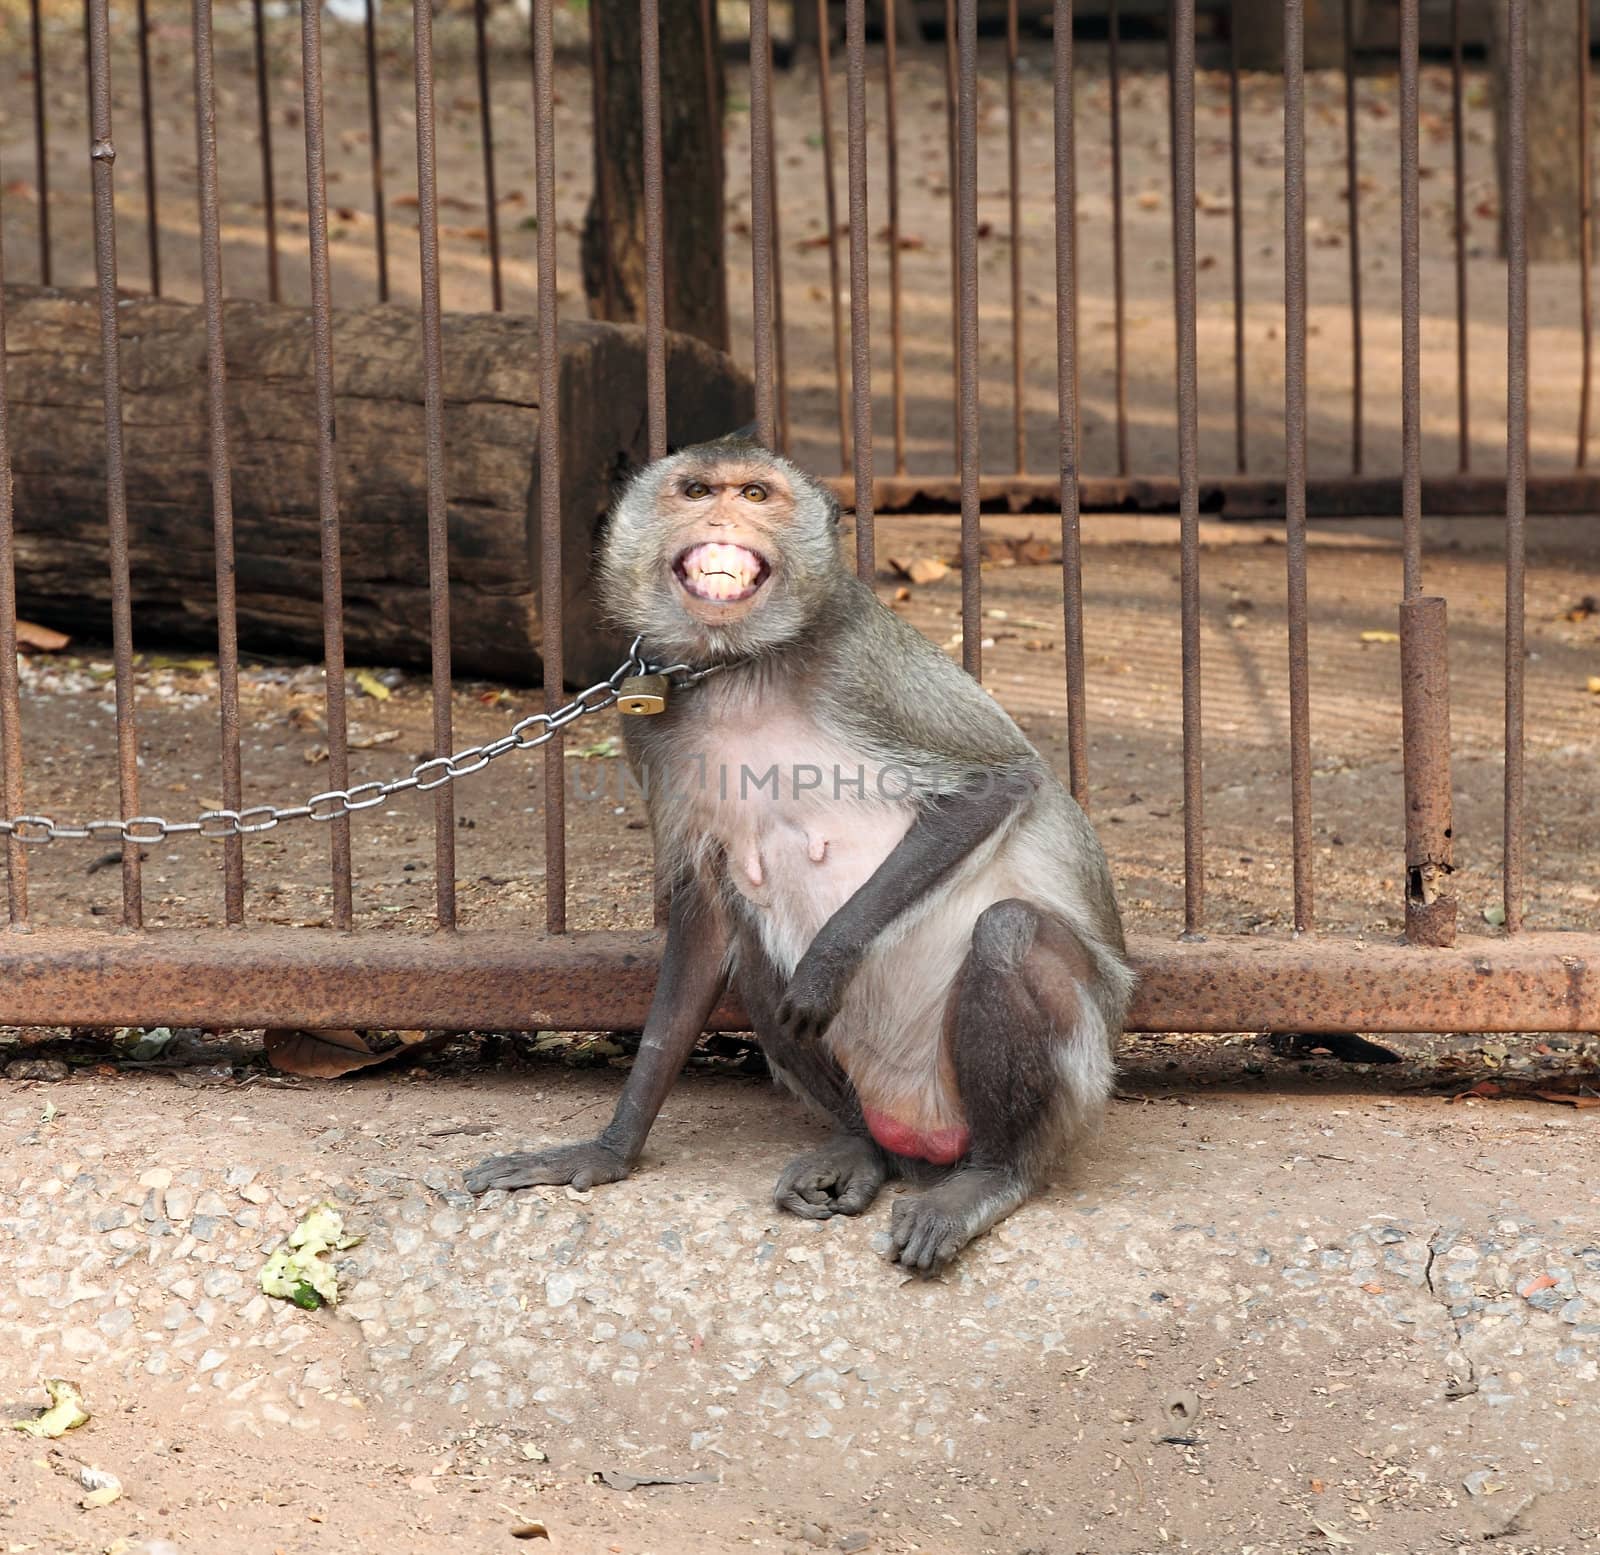 smile monkey with chain in Thailand by geargodz